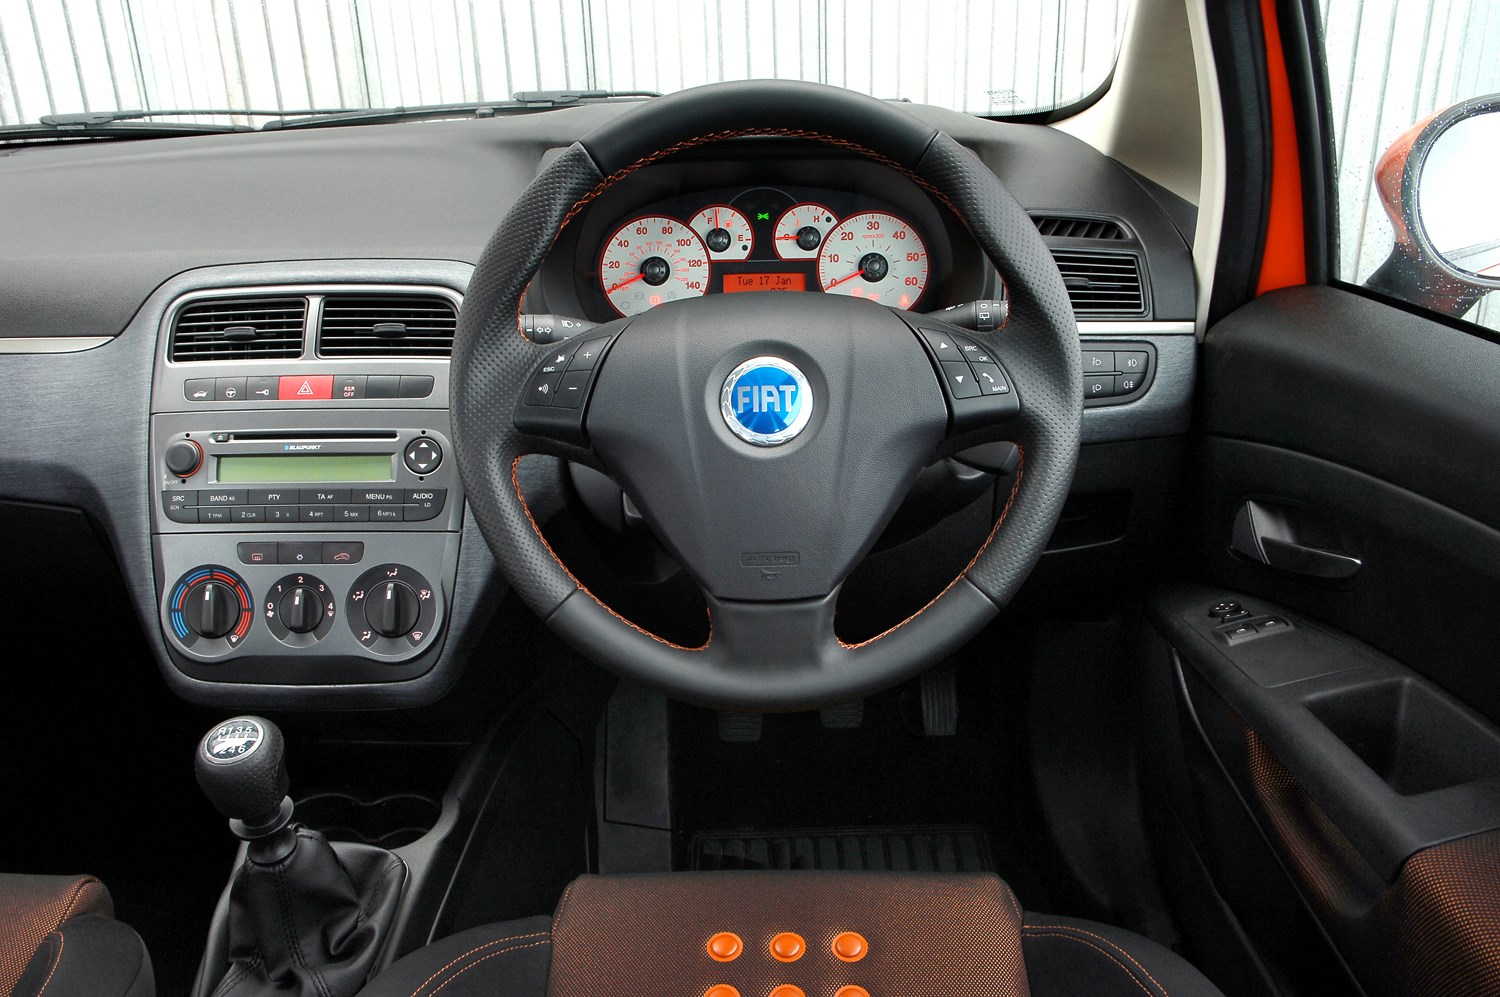 Used Fiat Grande Punto Hatchback 2006 2010 Interior